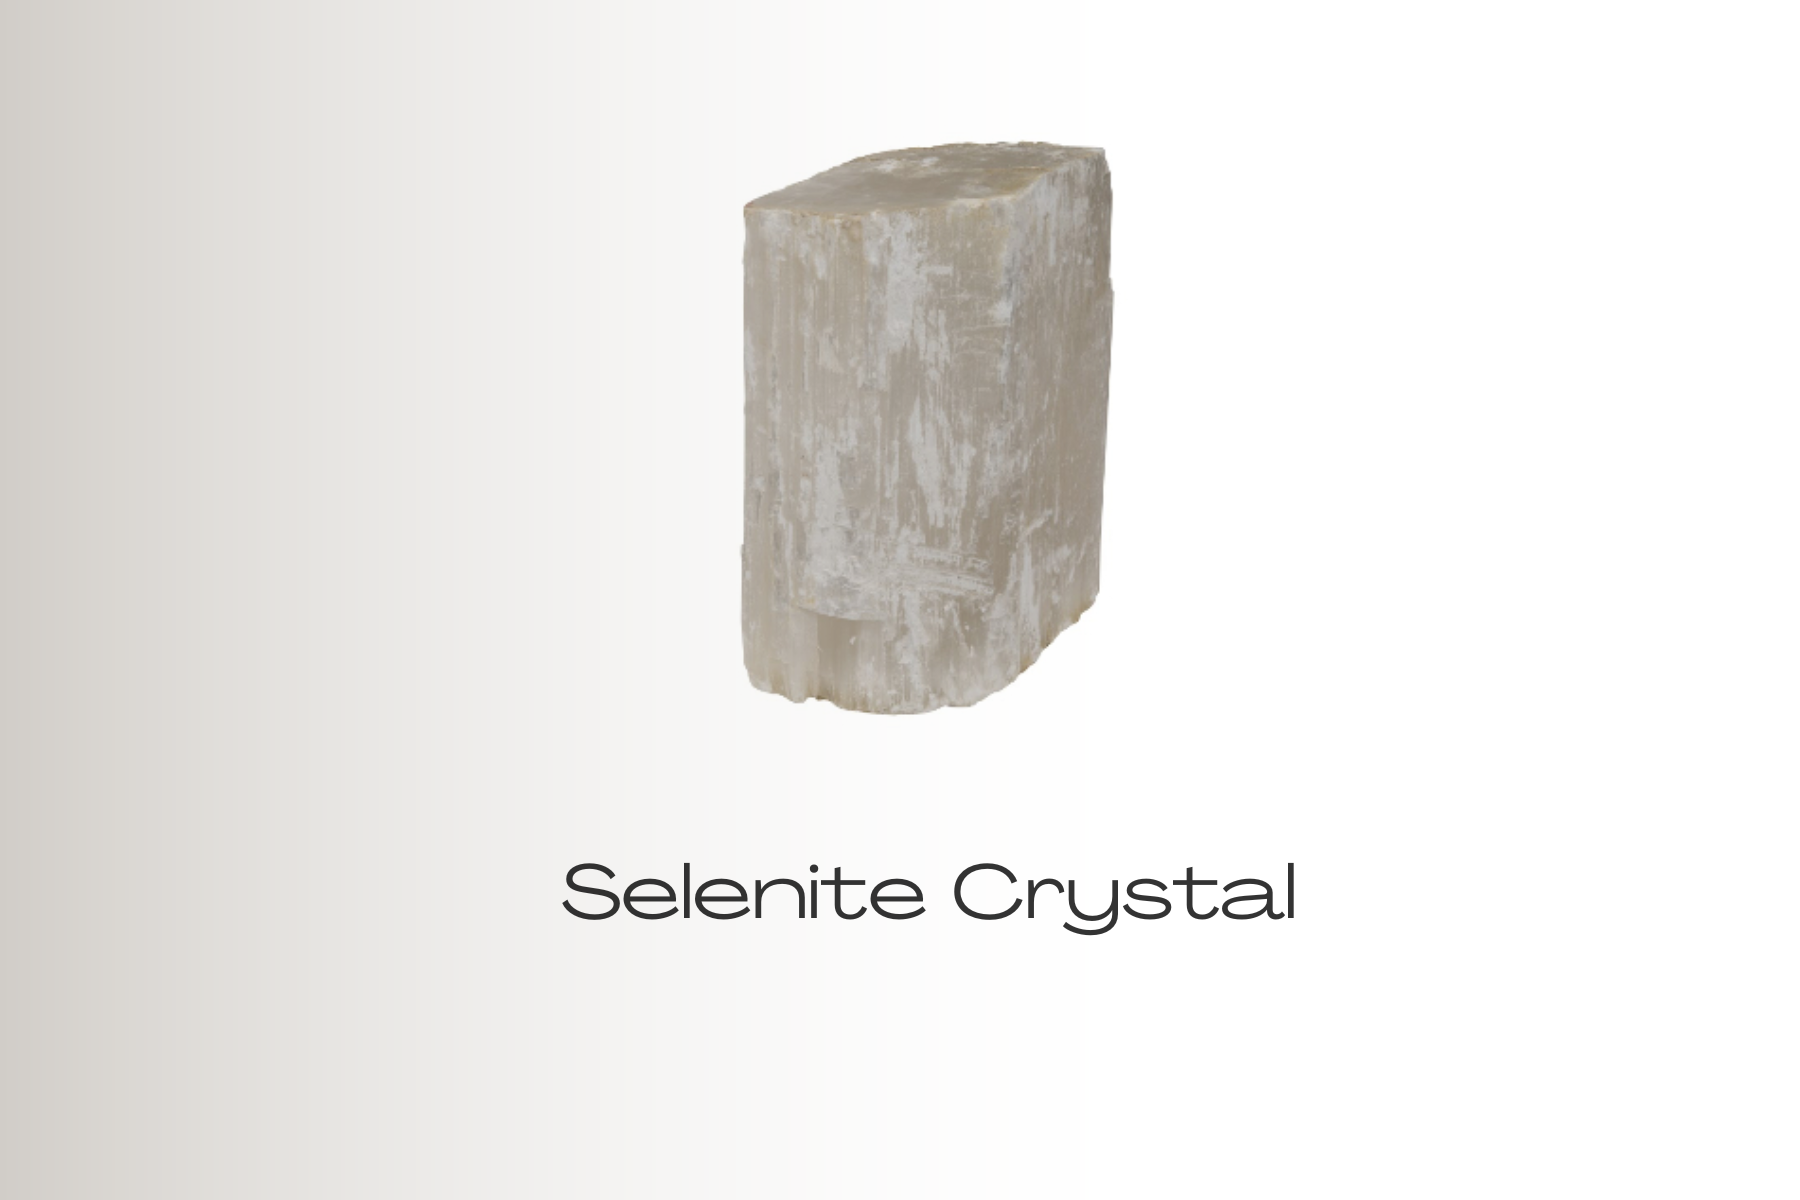 Gray Selenite stone